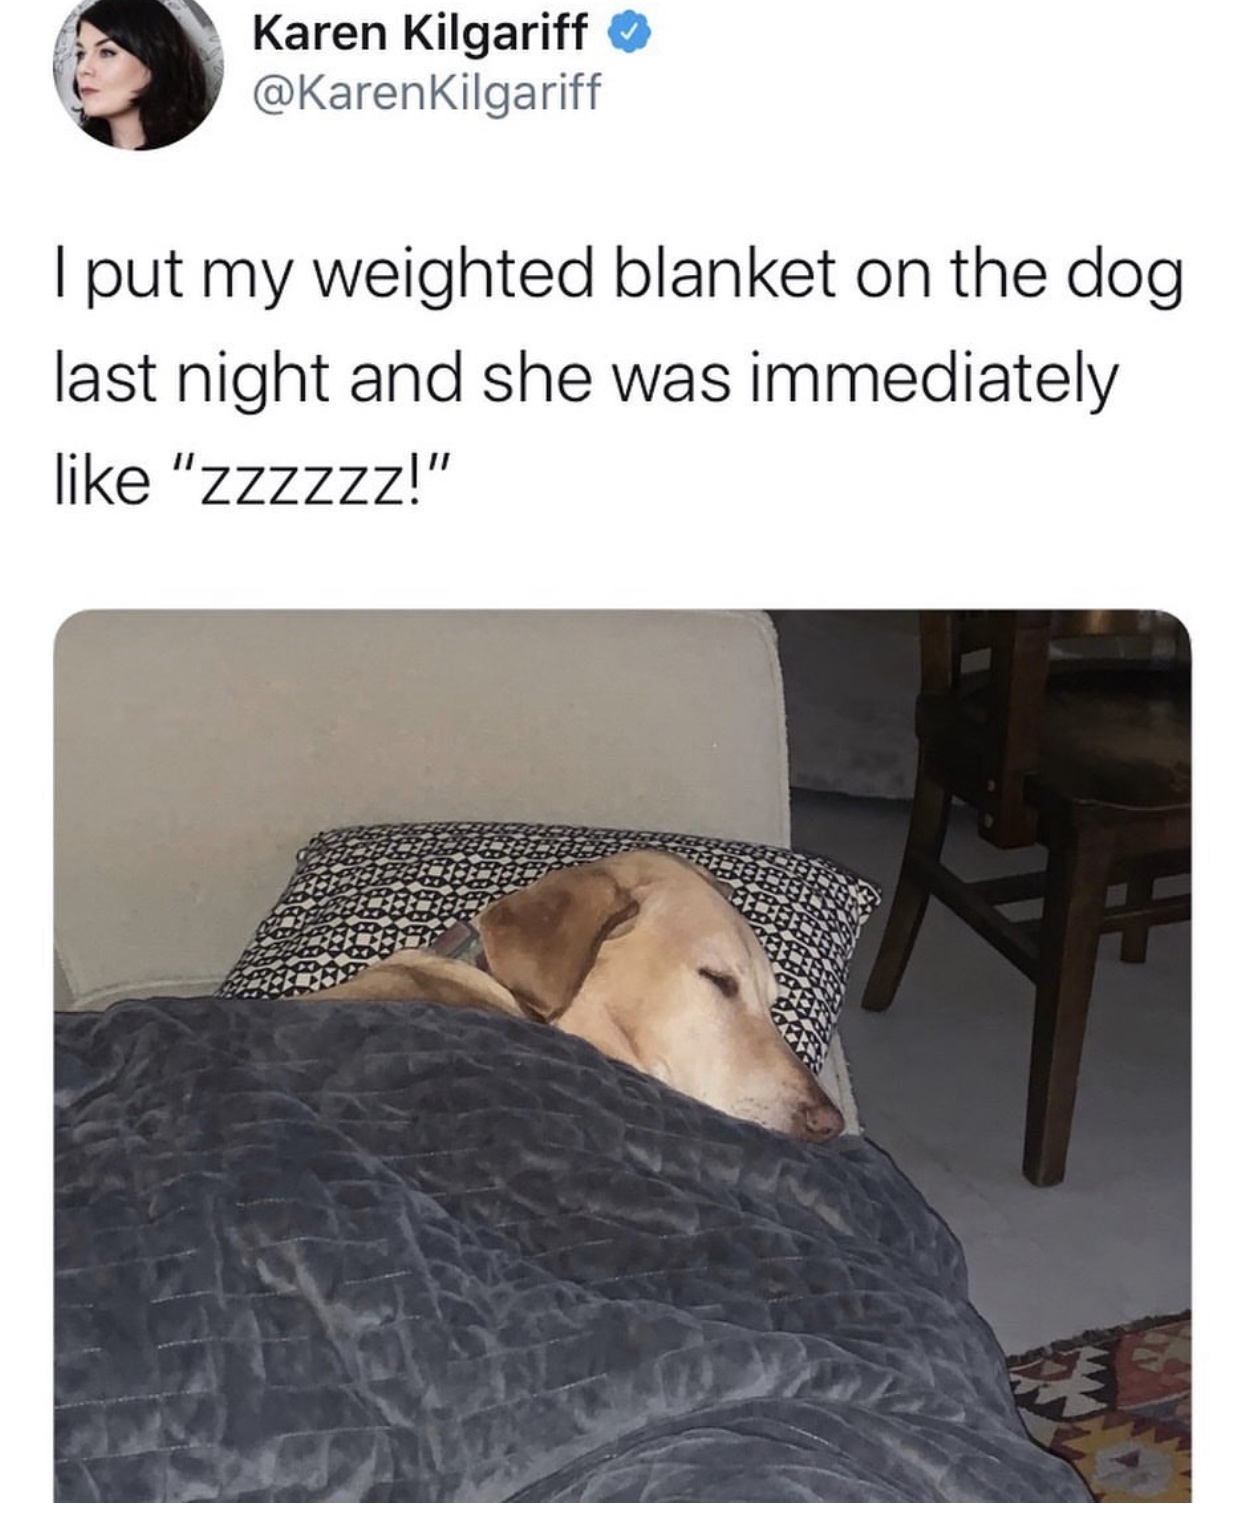 photo caption - Karen Kilgariff Kilgariff I put my weighted blanket on the dog last night and she was immediately "Zzzzzz!"